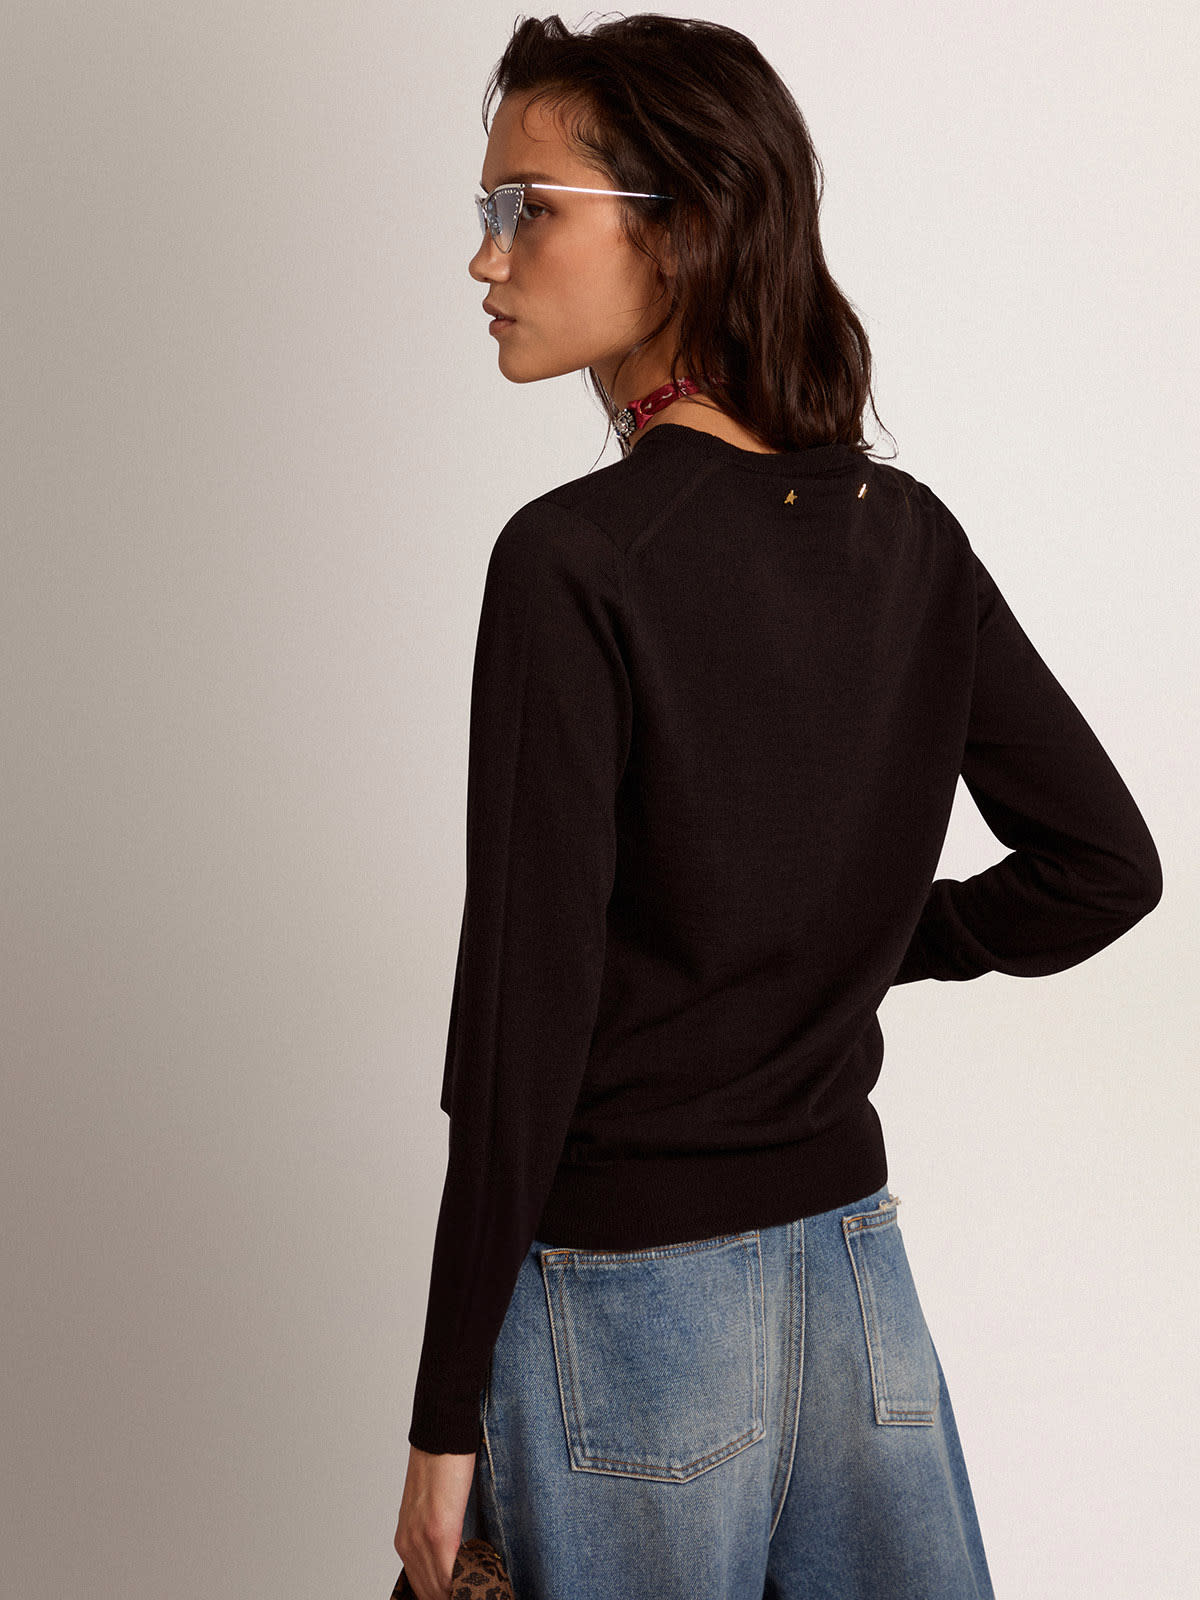 Golden Goose - Women's round-neck sweater in black wool in 